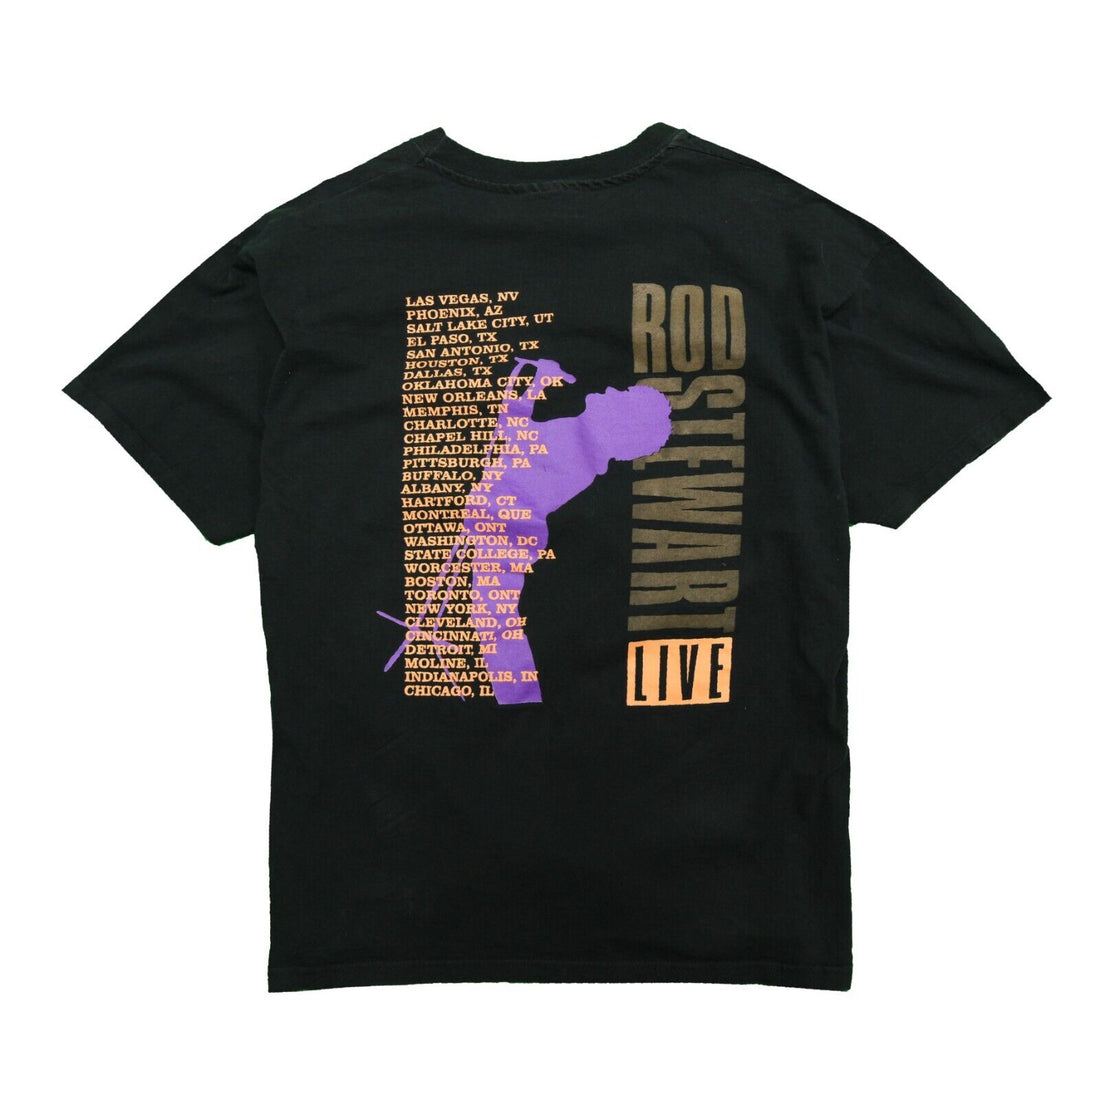 Vintage Rod Steward Live Tour Winterland T-Shirt Size XL Music 90s